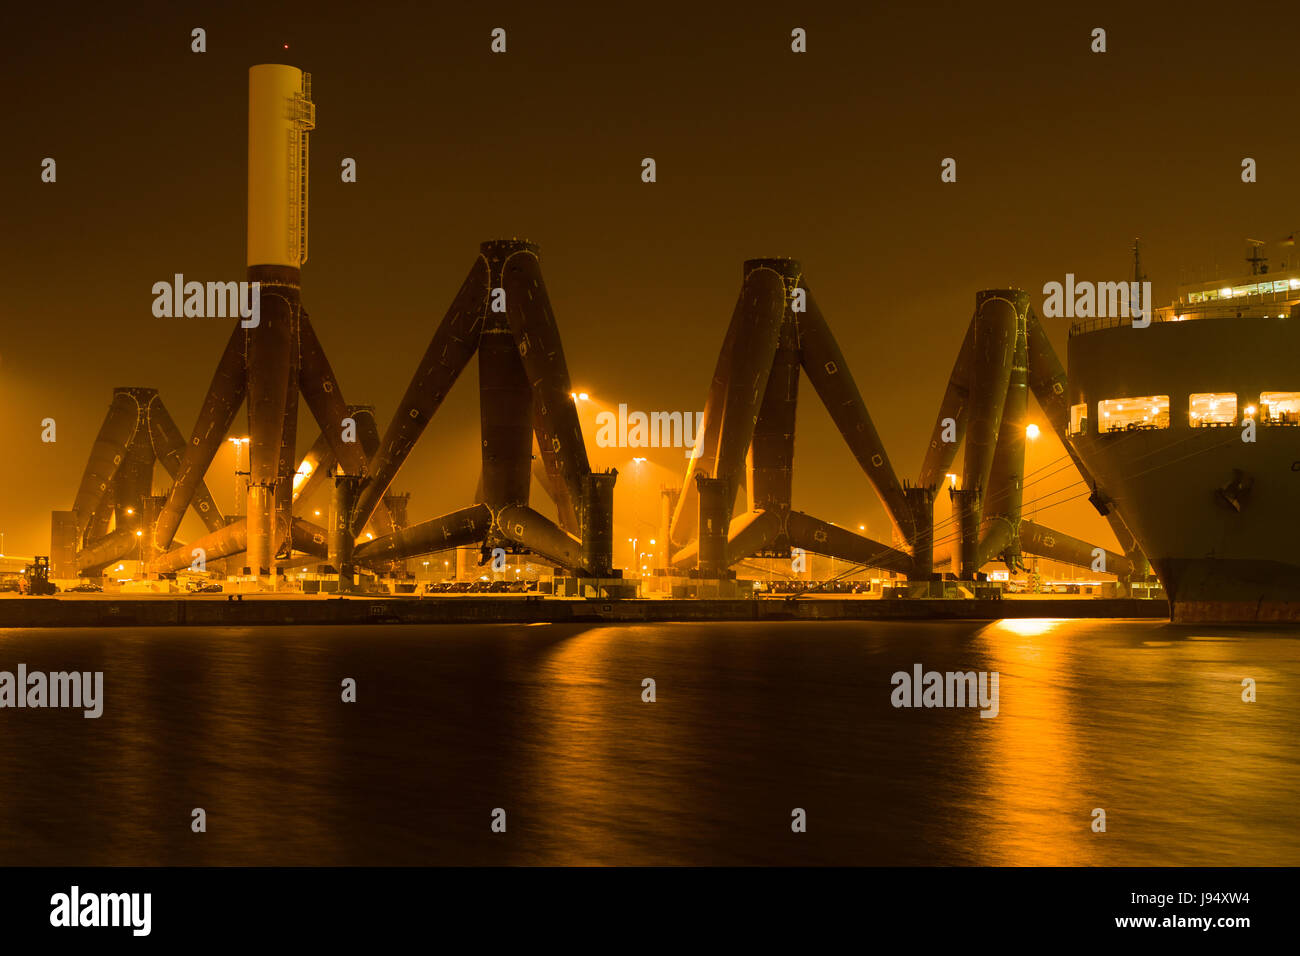 environment, enviroment, industry, night photograph, harbor, harbours, Stock Photo